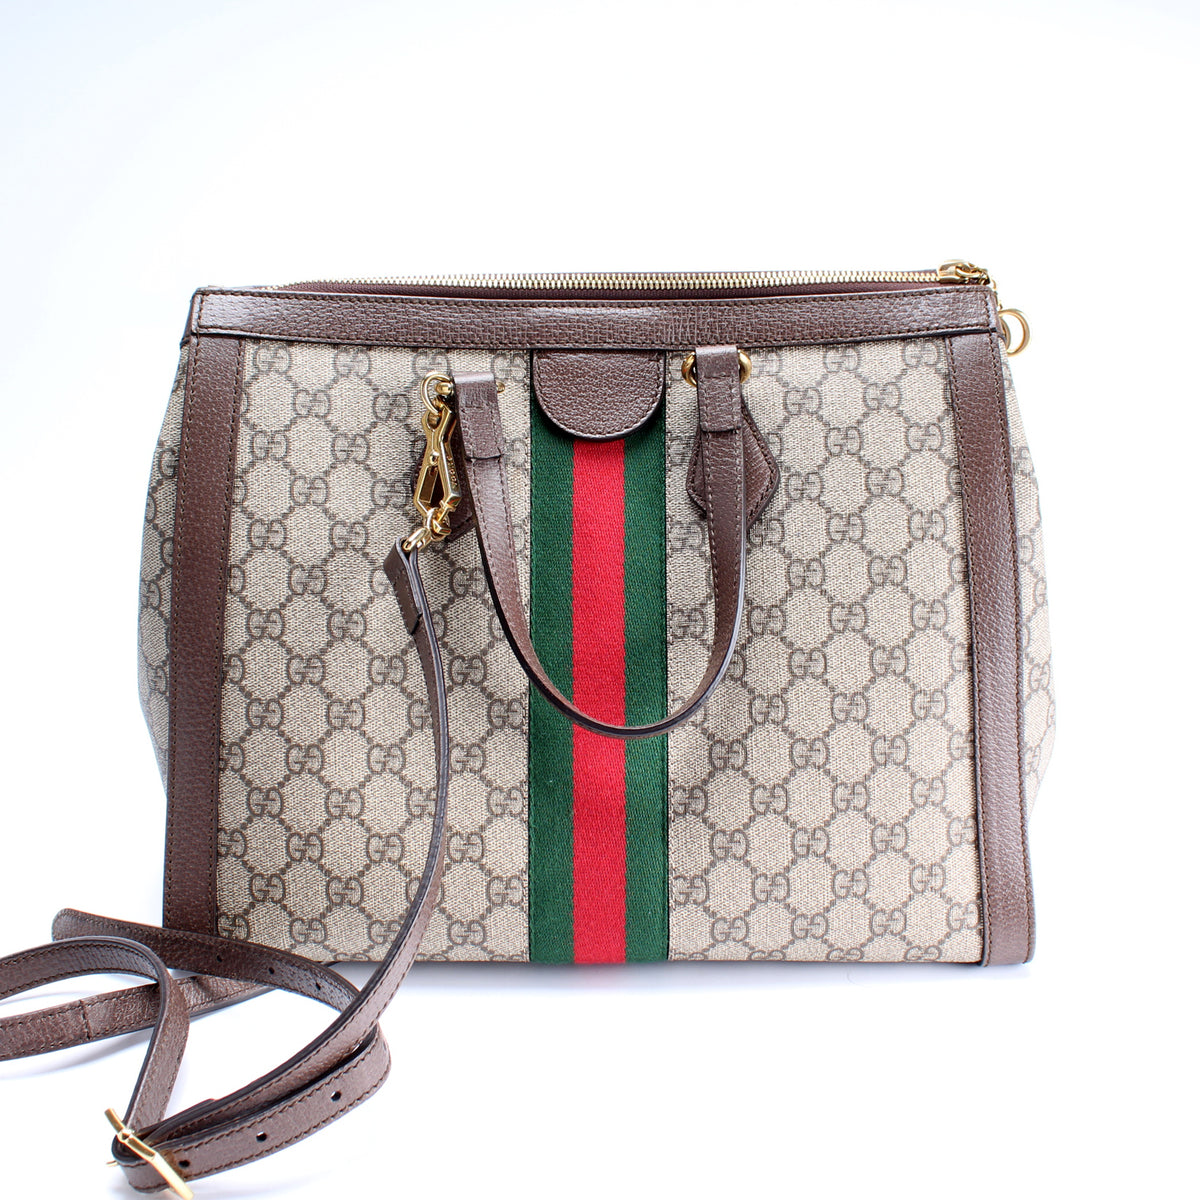 Gucci Ophidia Medium GG Tote Bag